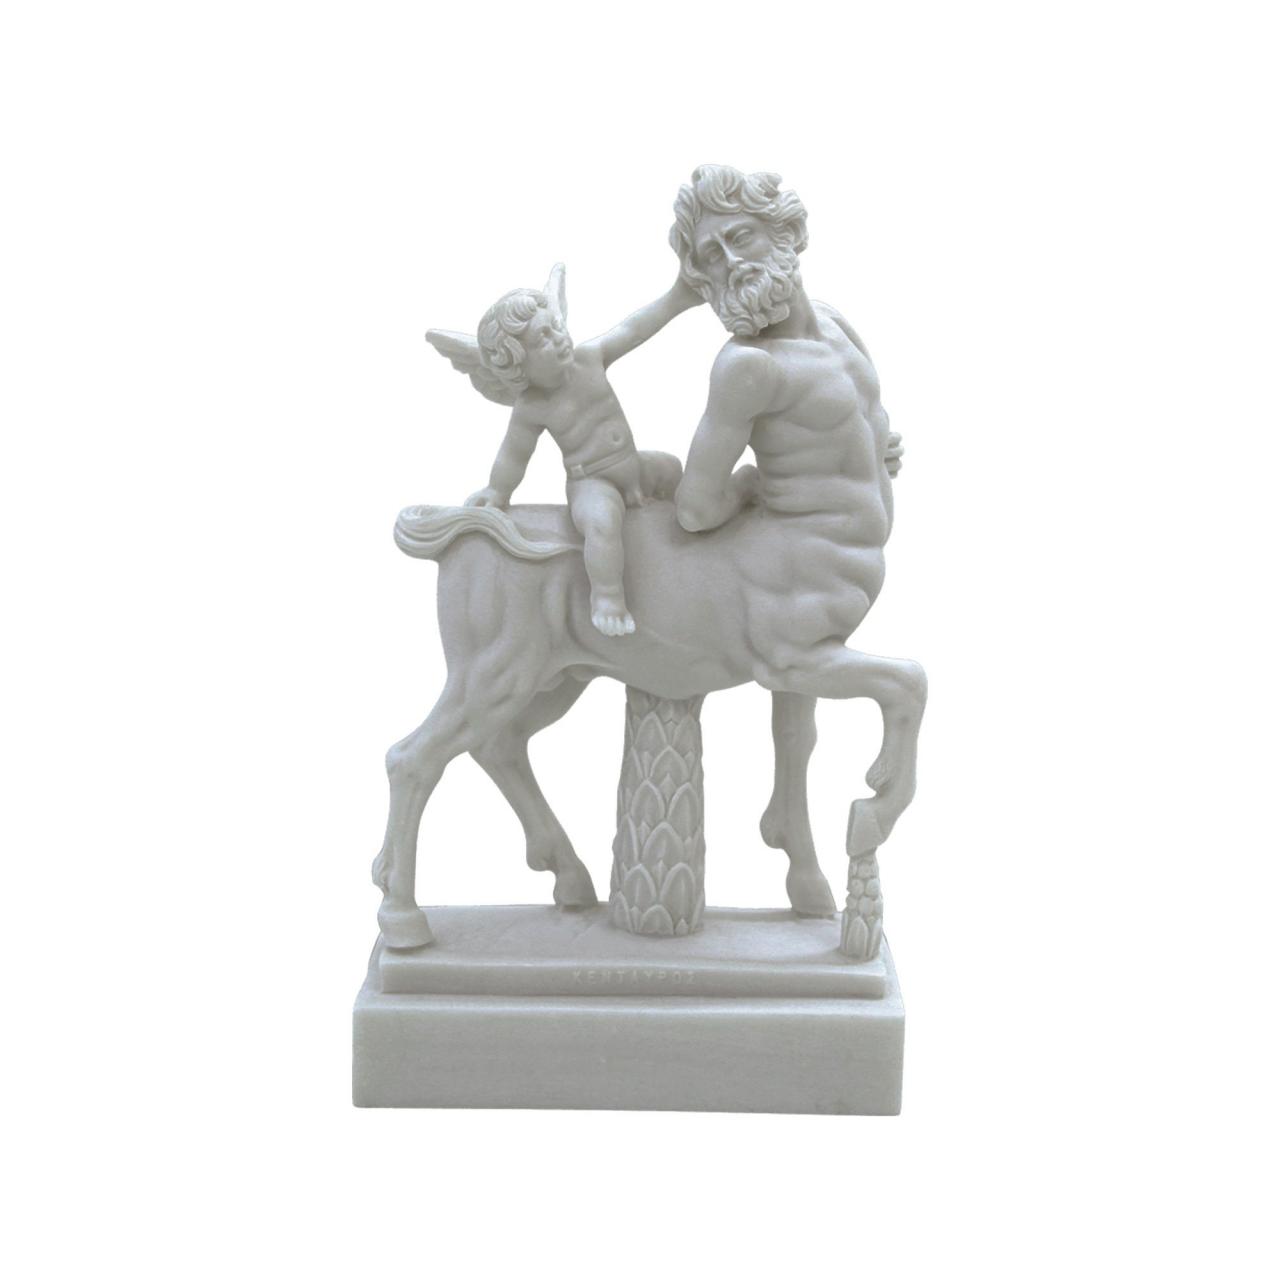 Centaur & Eros Statue Greek Roman Mythology Handmade Copy Sculpture 23cm